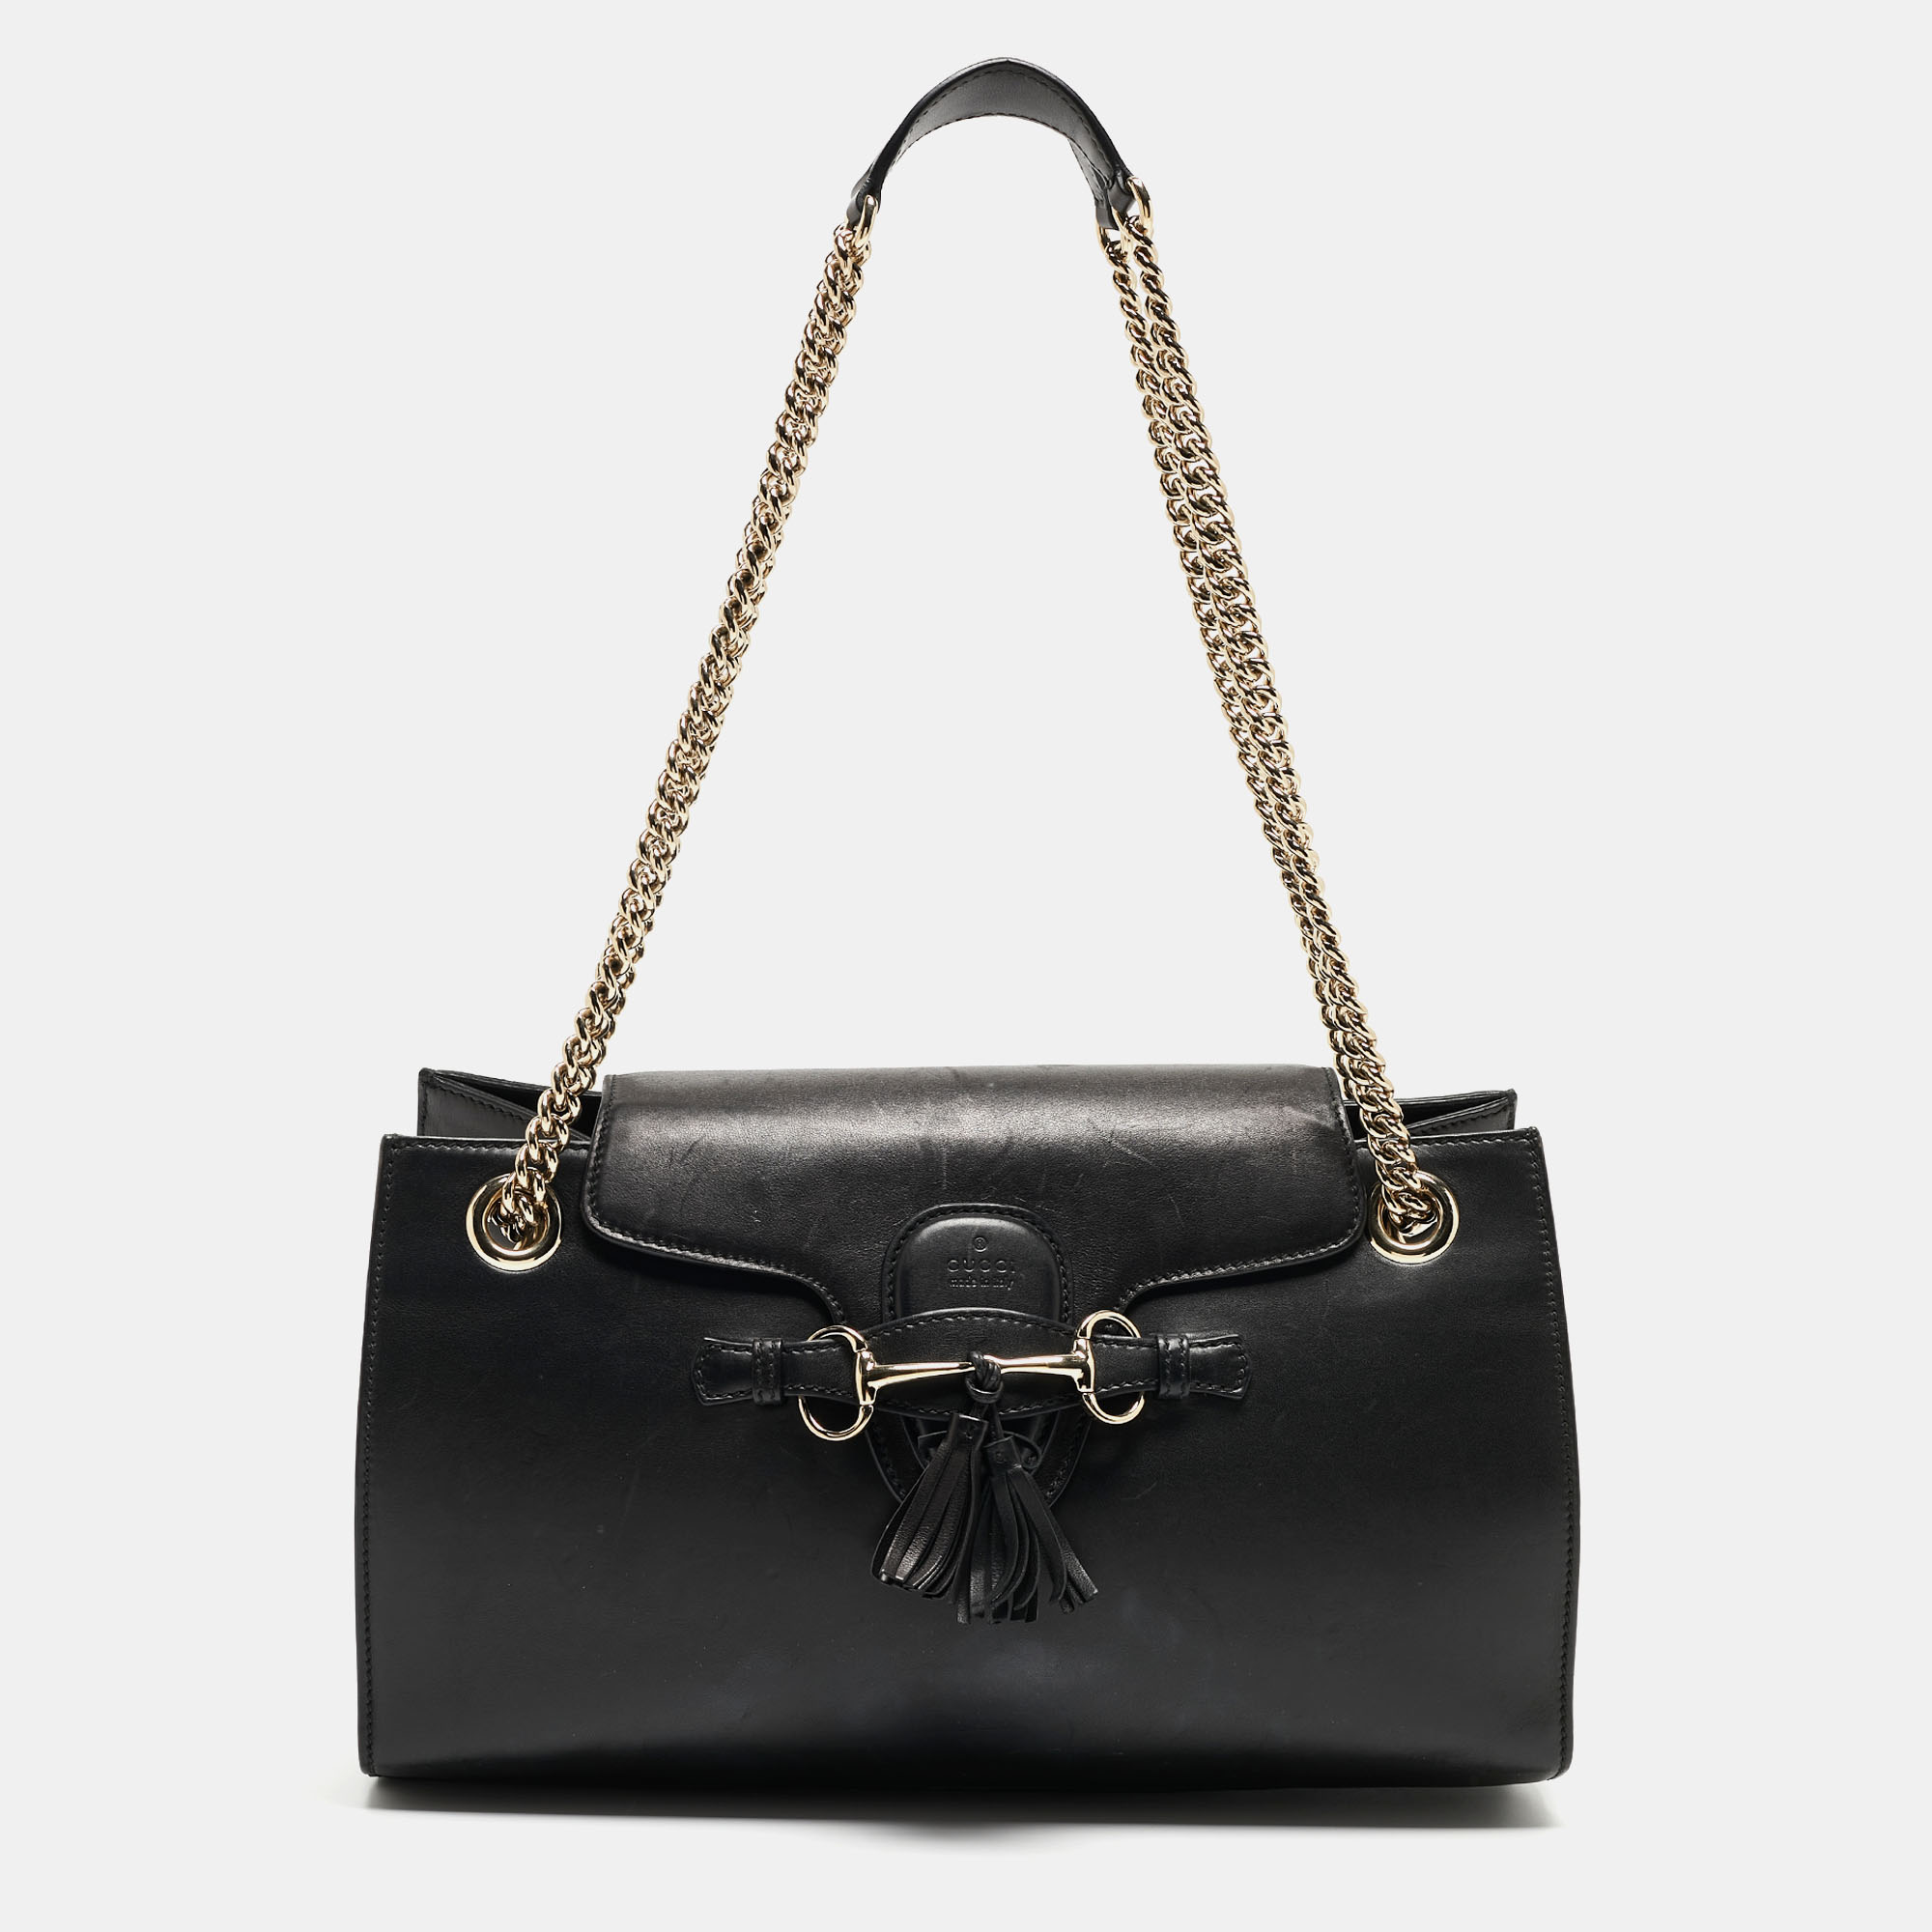 Gucci black leather large emily chain shoulder bag